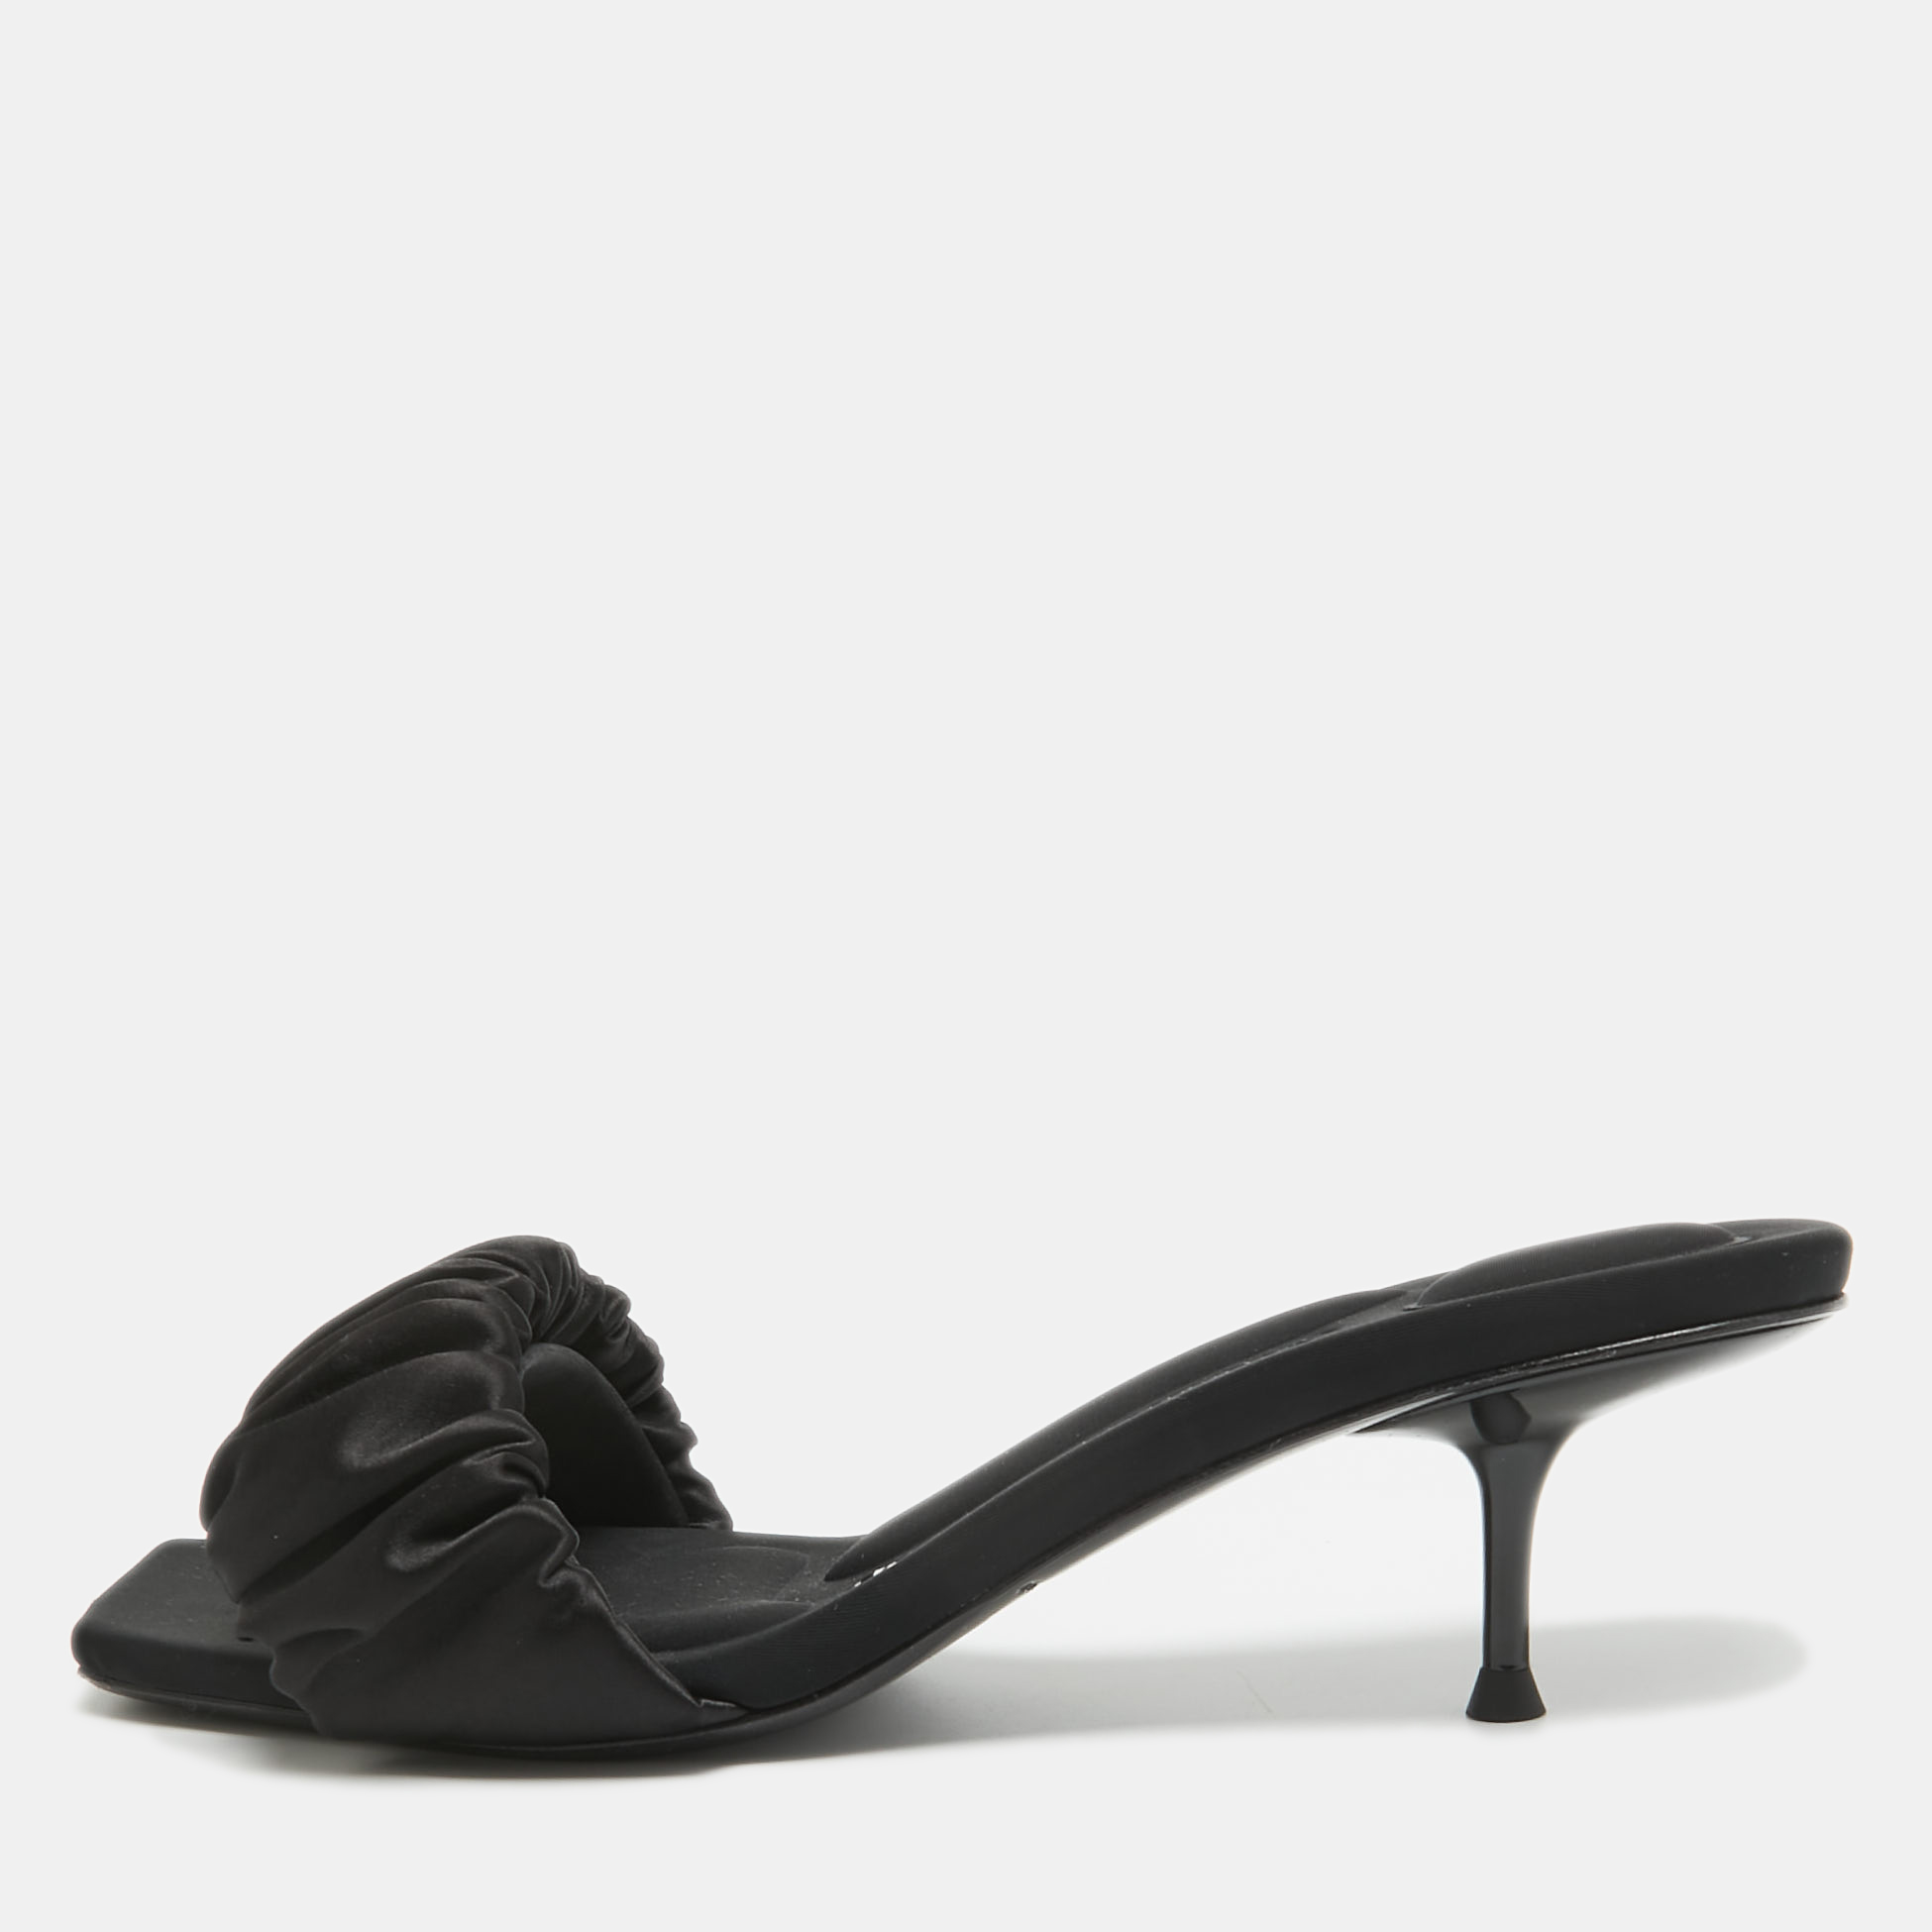 Alexander wang black pleated satin slide sandals size 37